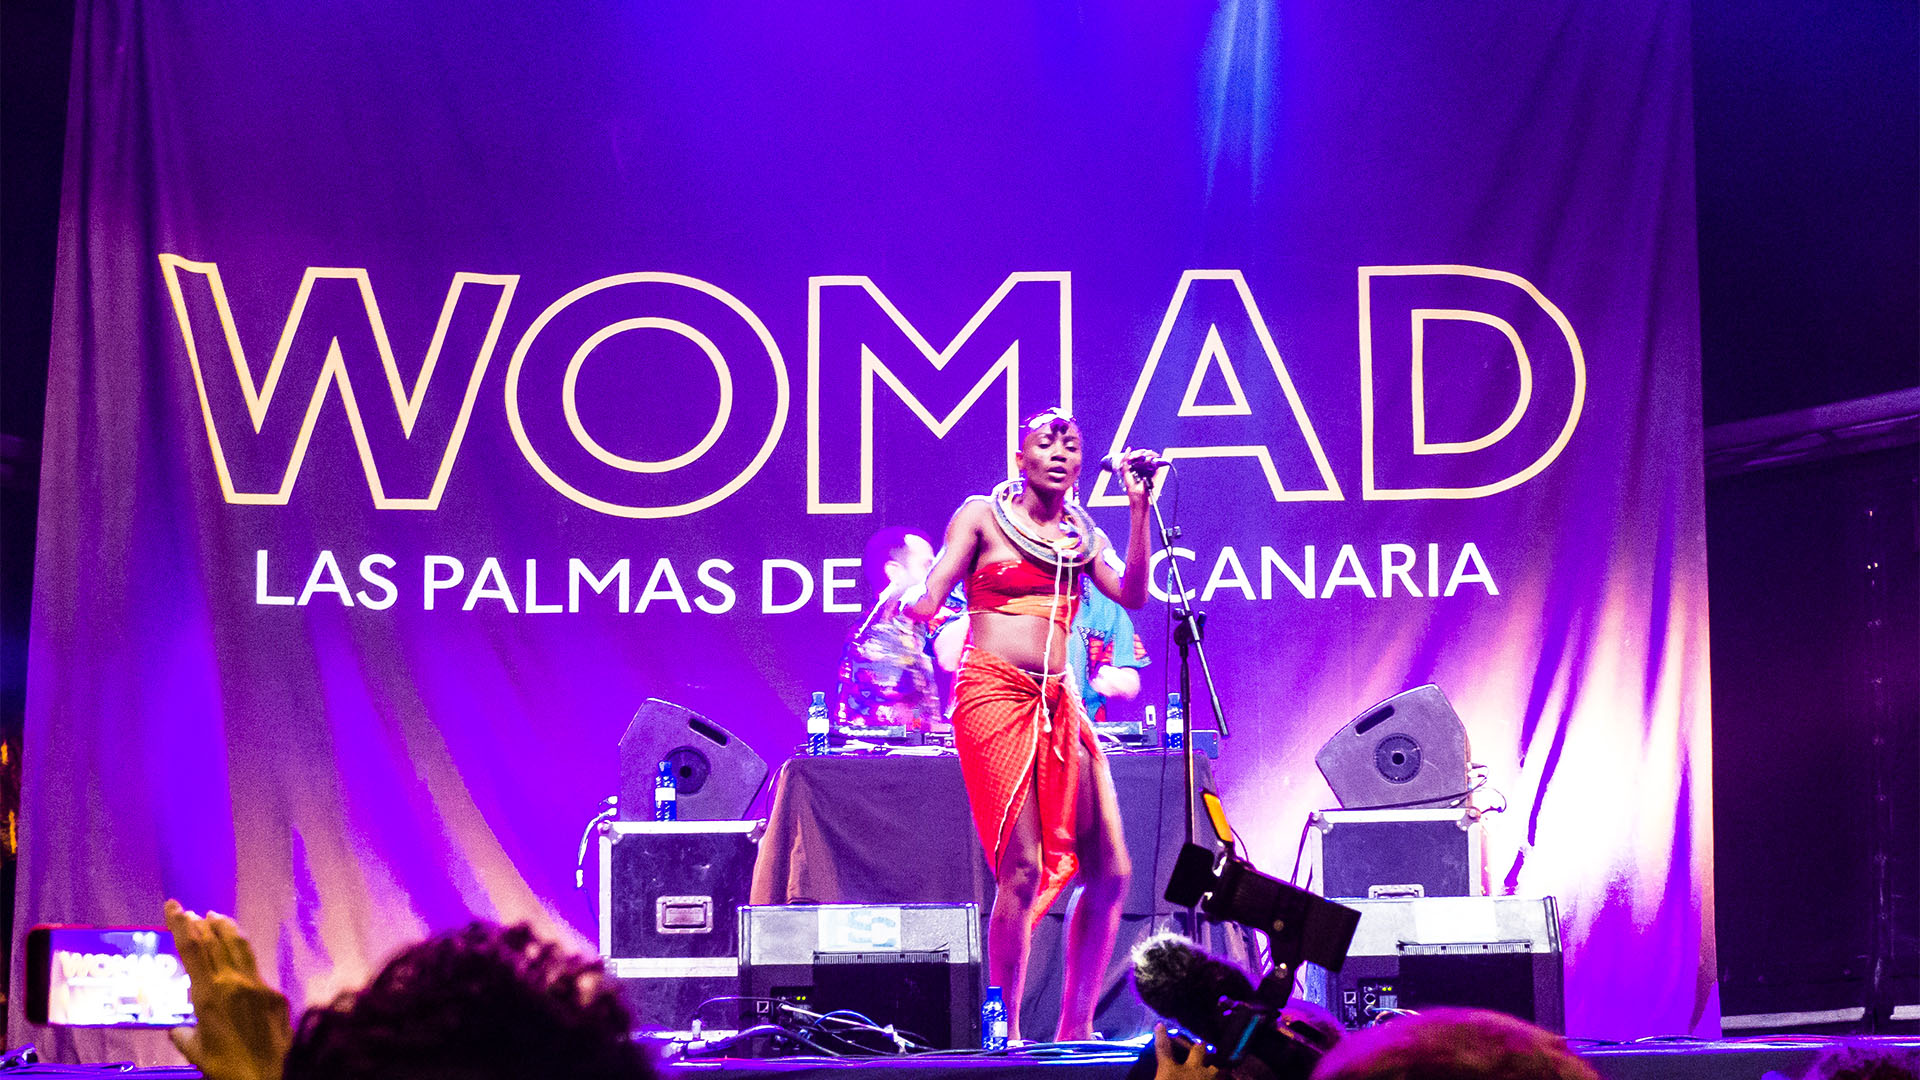 WOMAD Festival 2017 Las Palmas Gran Canaria. On stage: "Beating Heart Music" Electro Dance aus South Africa mit Performance von Lulu James Tansania / UK. Das Publikum bebt – zu recht.